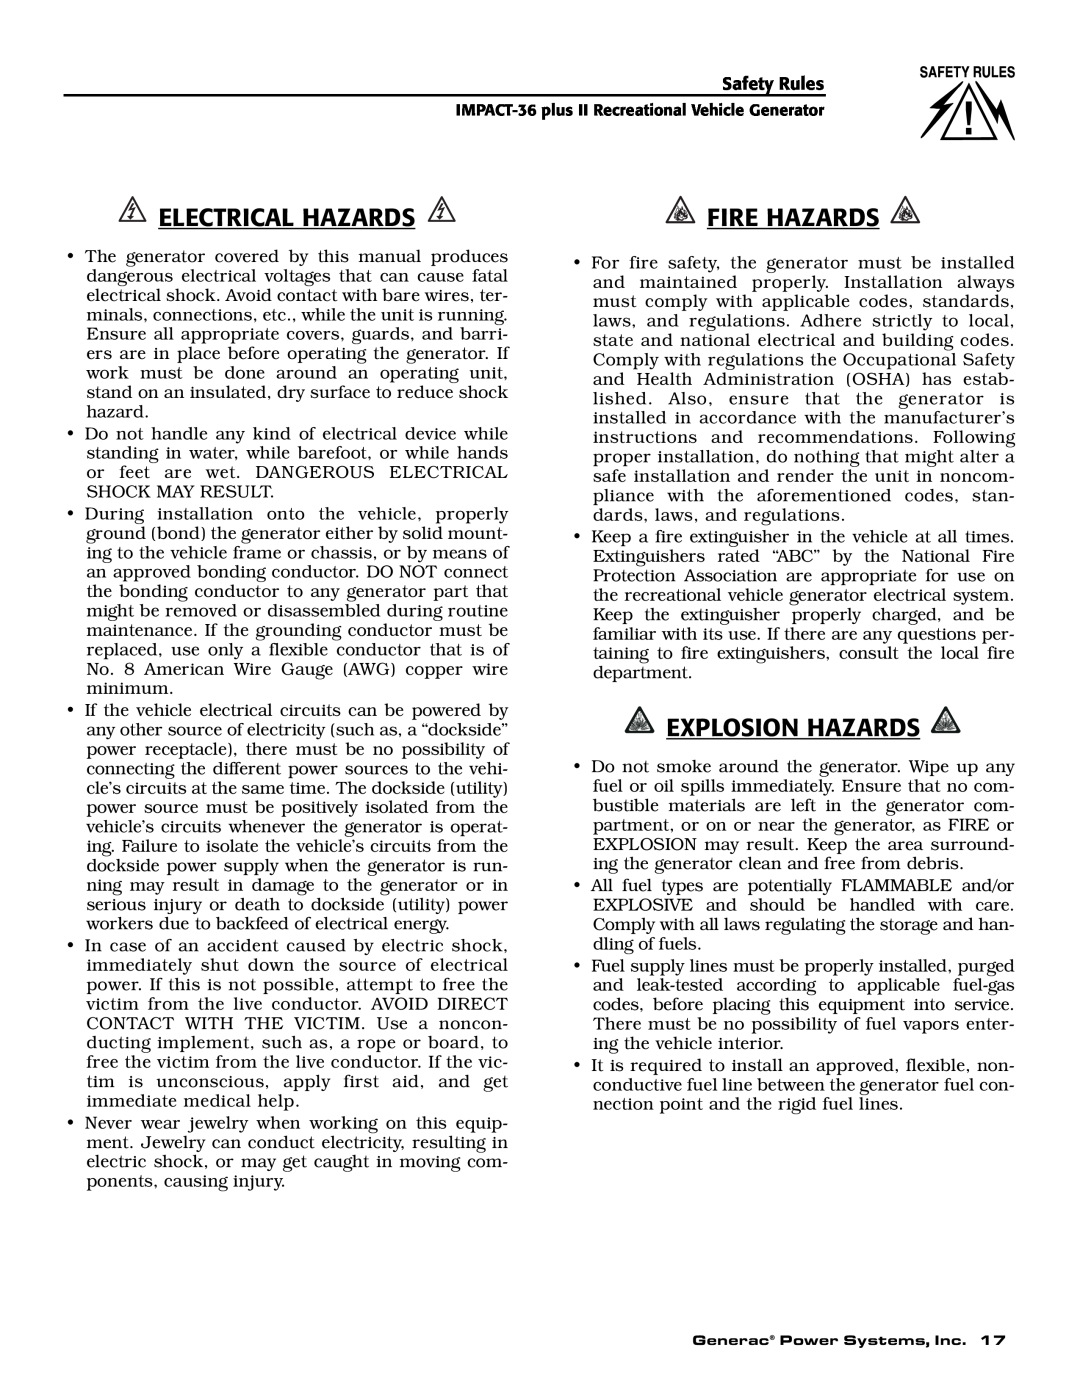 Generac 00941-3 owner manual Electrical Hazards, Explosion Hazards, Fire Hazards 